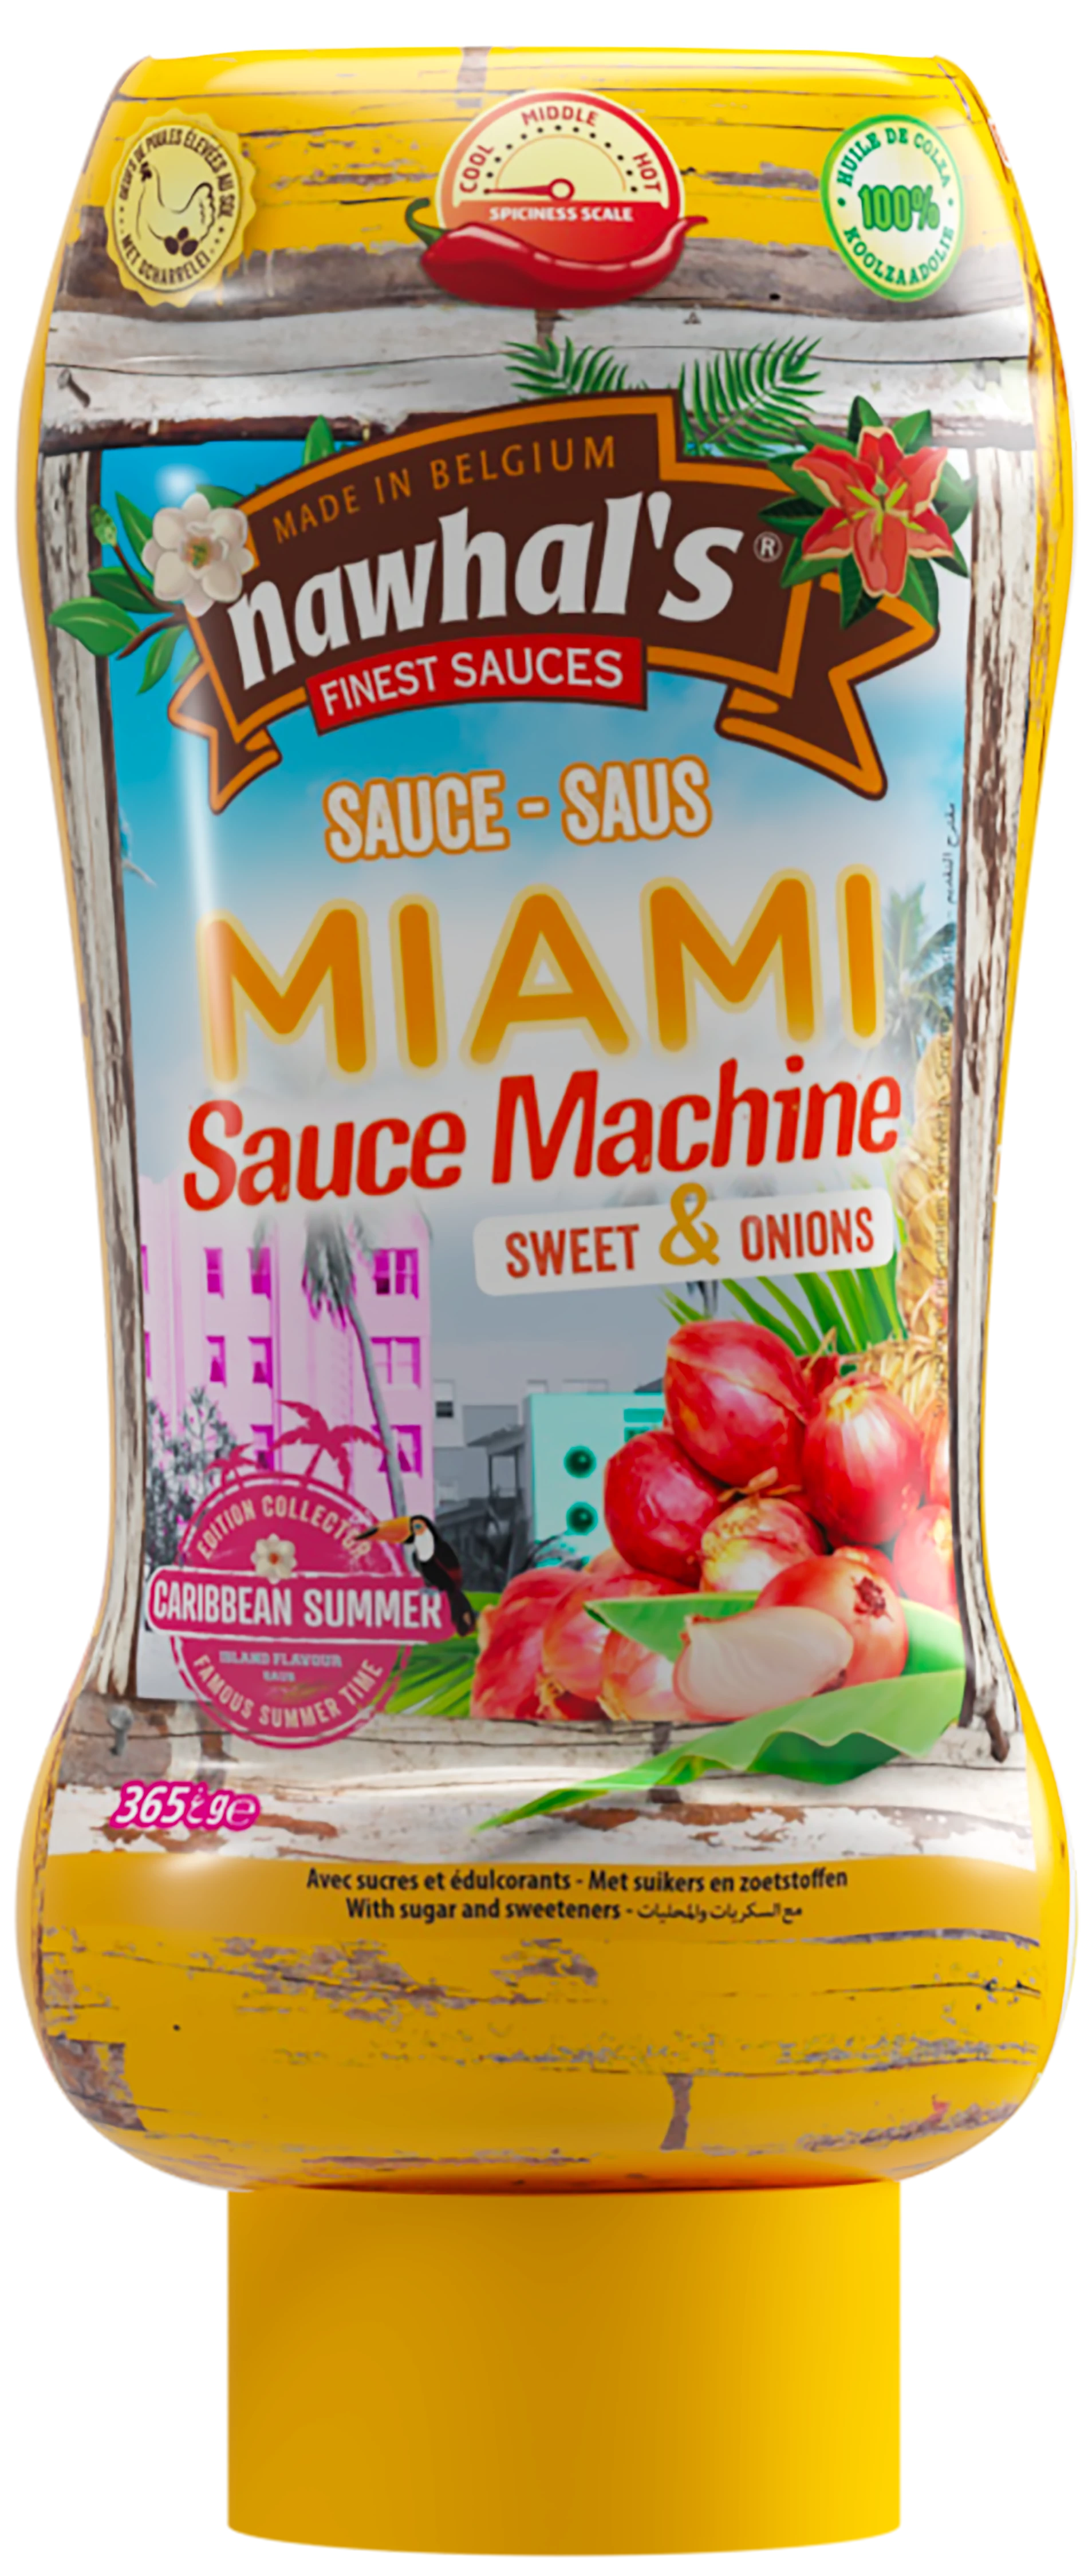 Miami Sauce 365gr / 350ml - NAWHAL'S